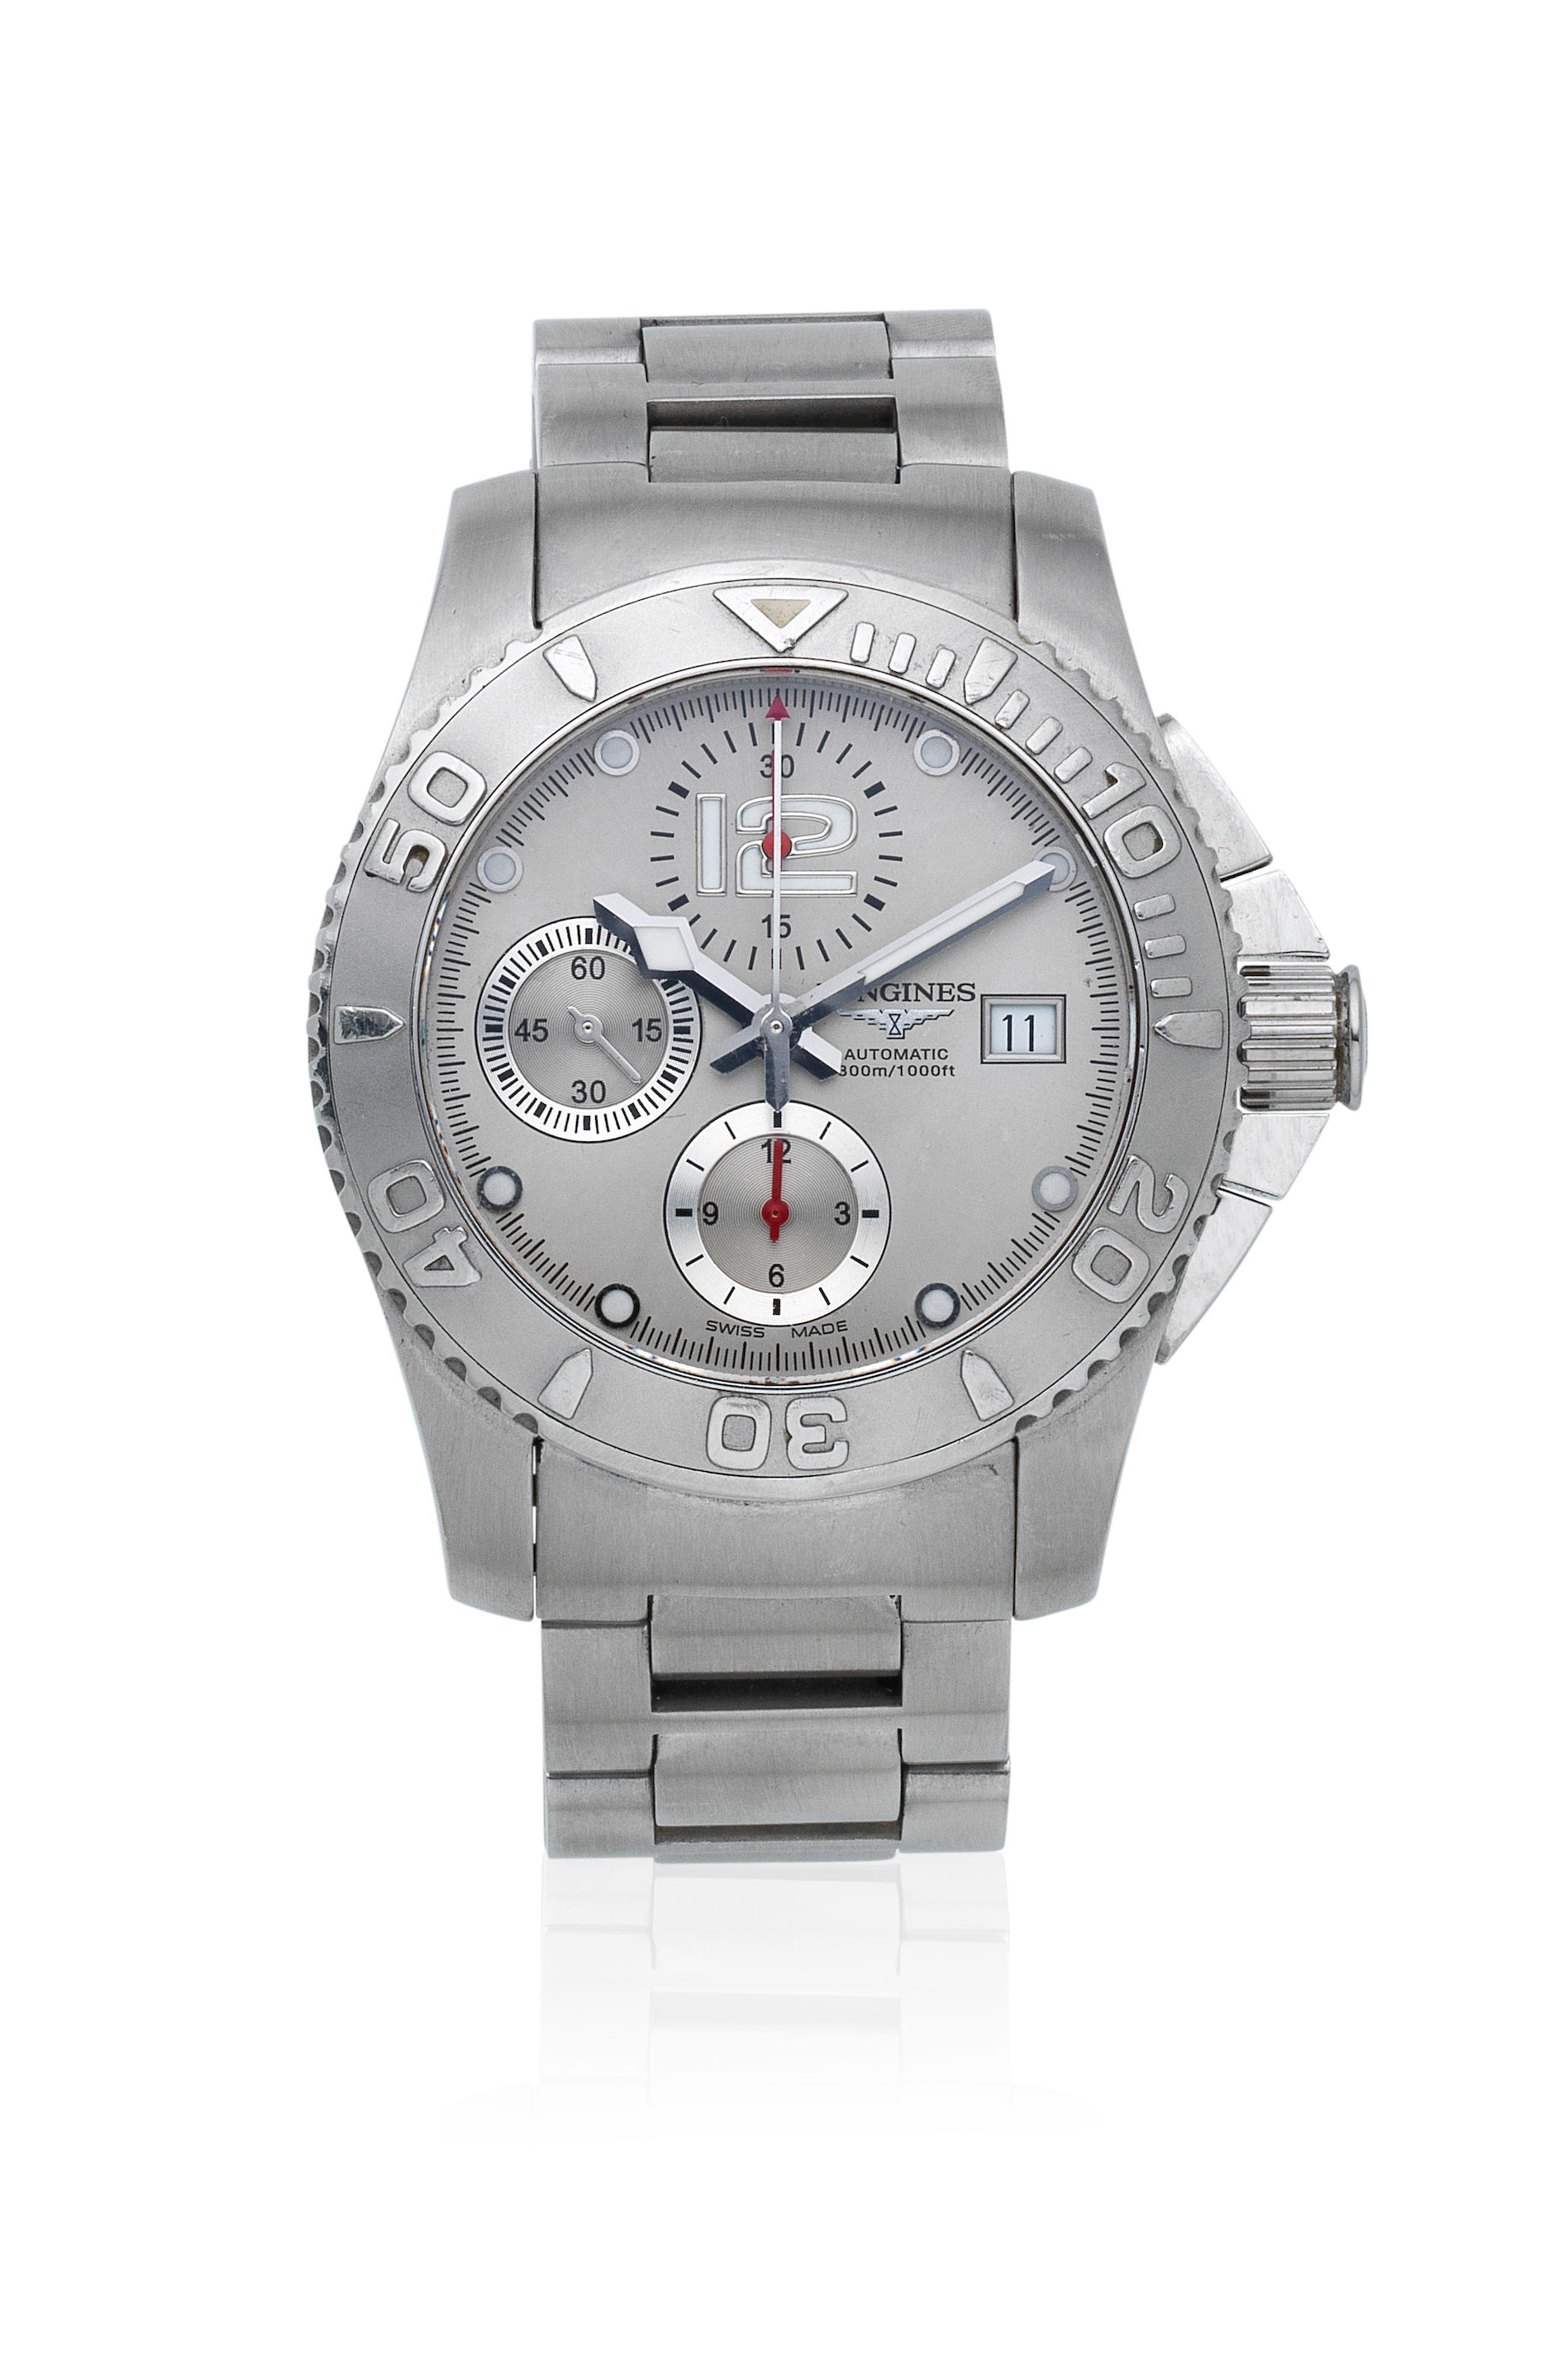 Longines. A stainless steel automatic calendar chronograph bracelet watch